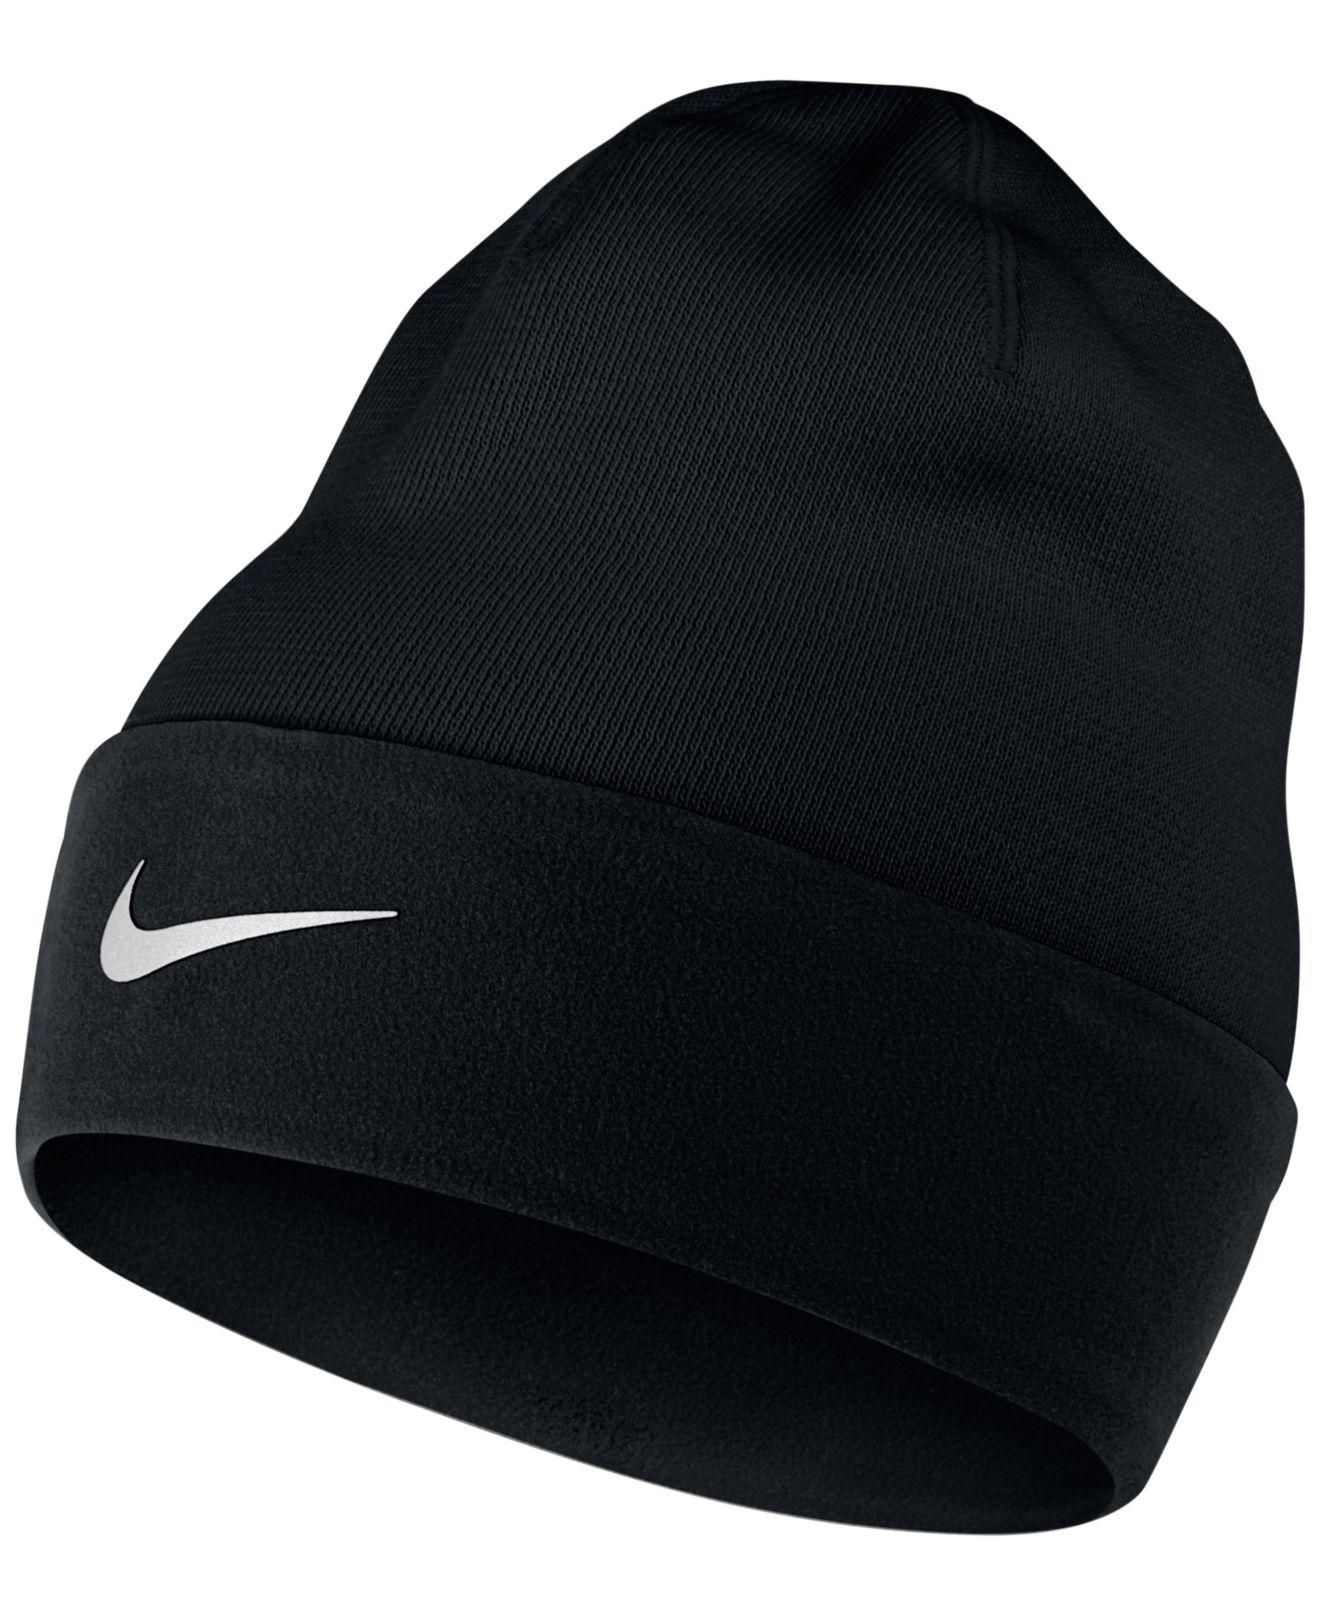 Nike Fleece Cuffed Dri-fit Run Beanie in Black/Black (Black) for Men - Lyst